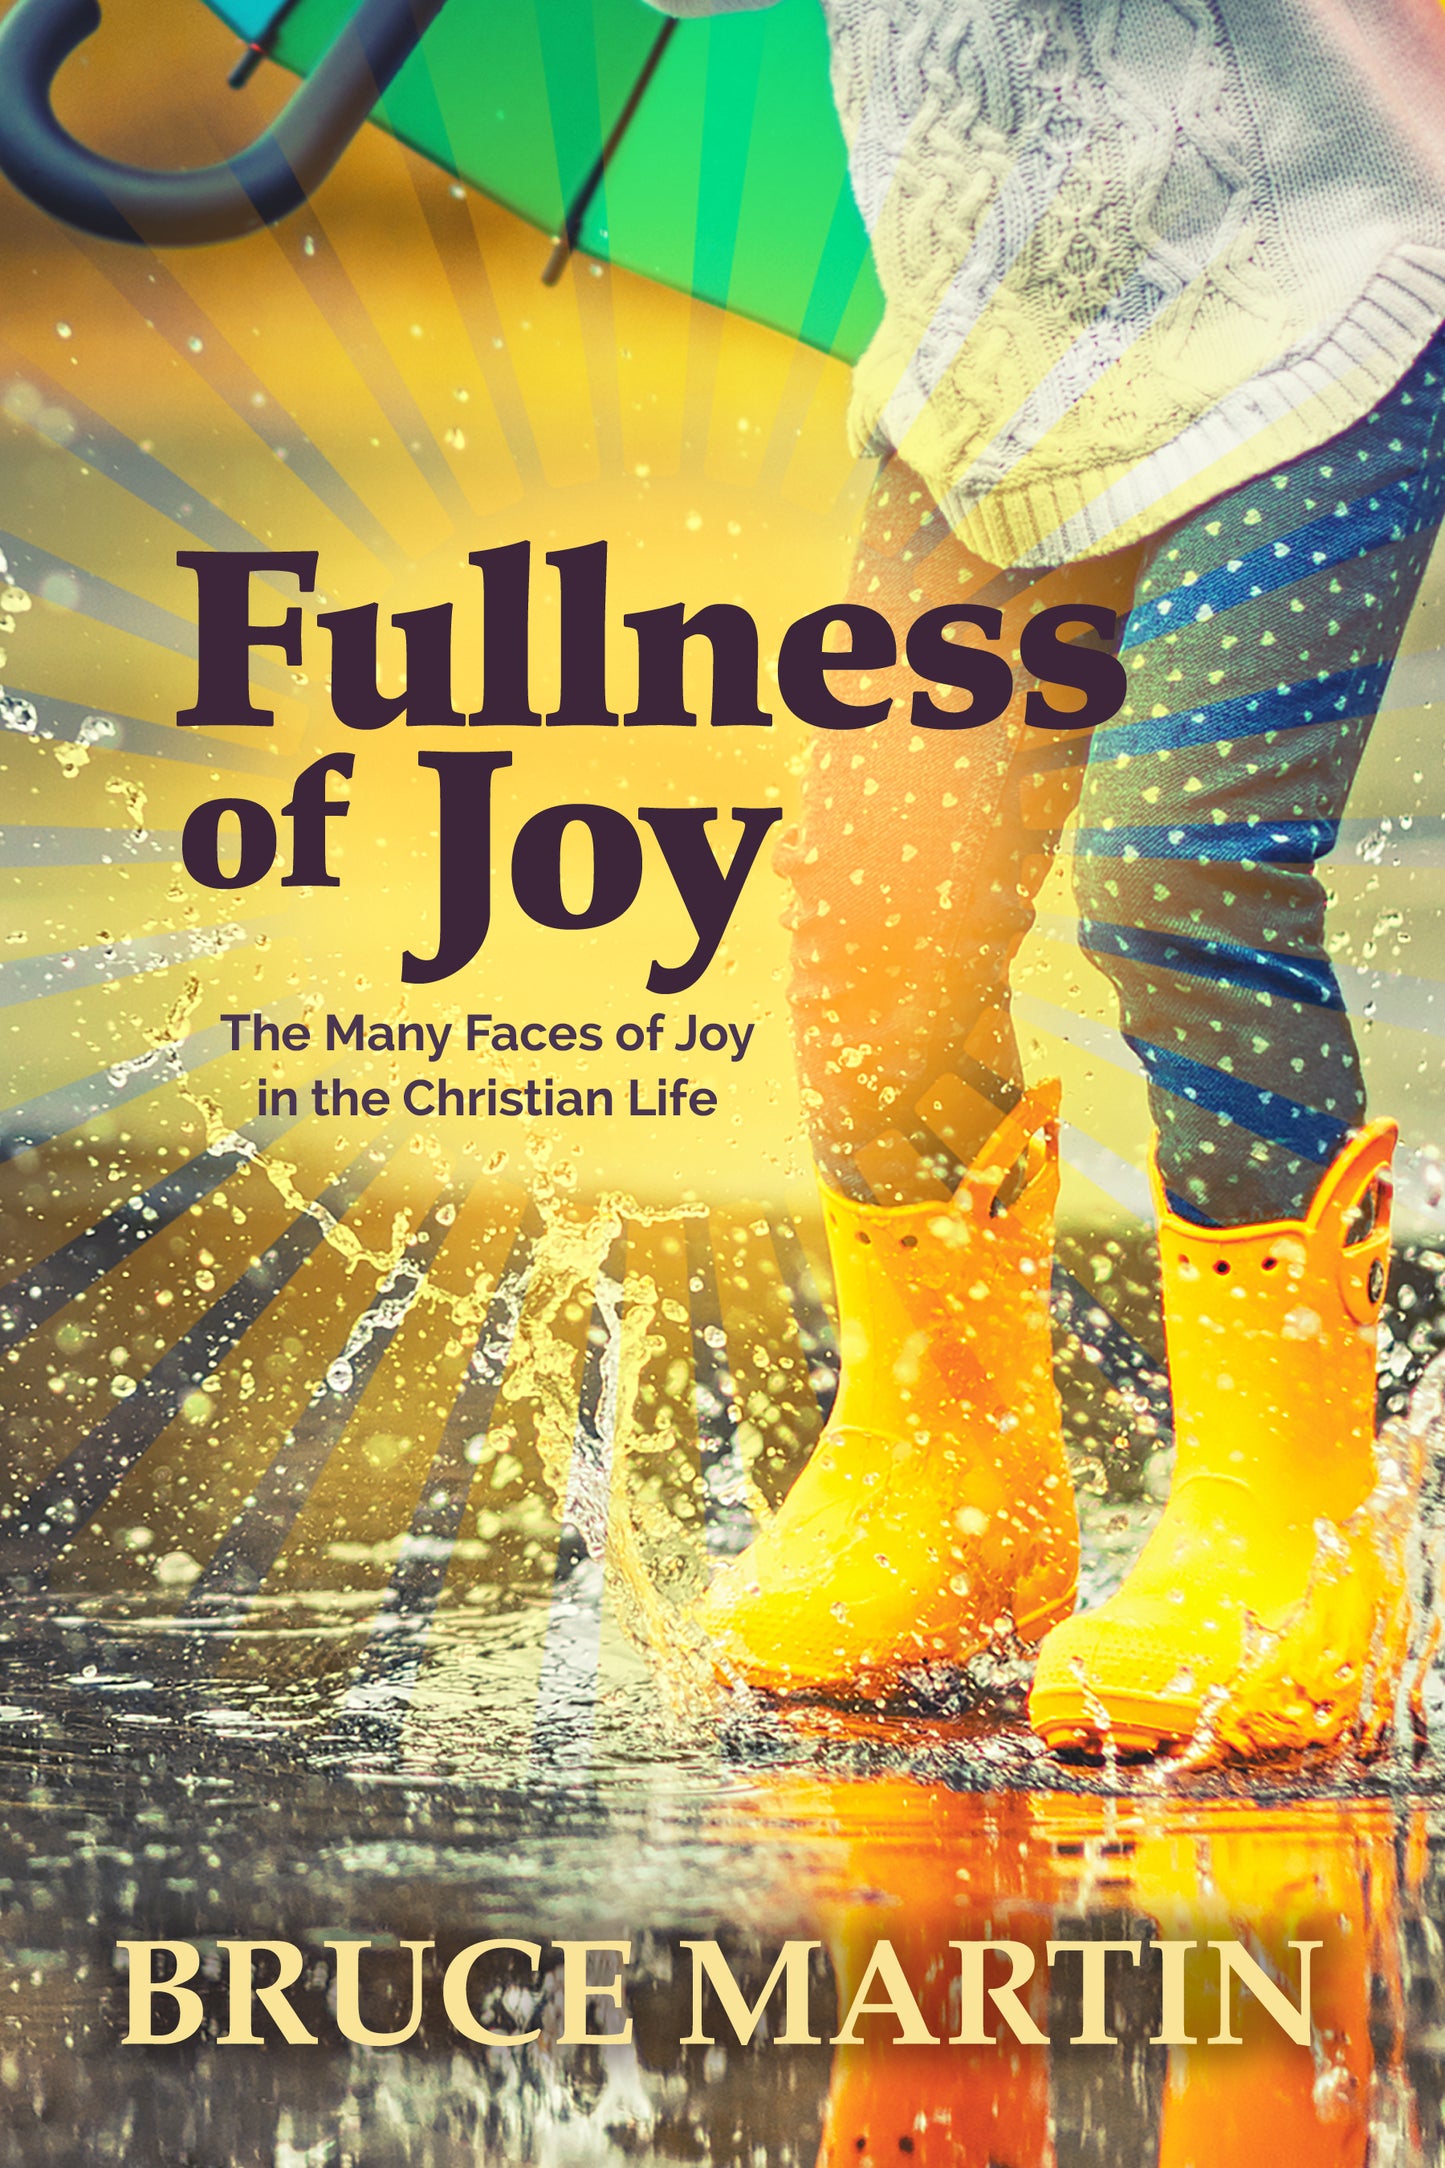 Fullness of Joy: The Many Faces of Joy in the Christian Life